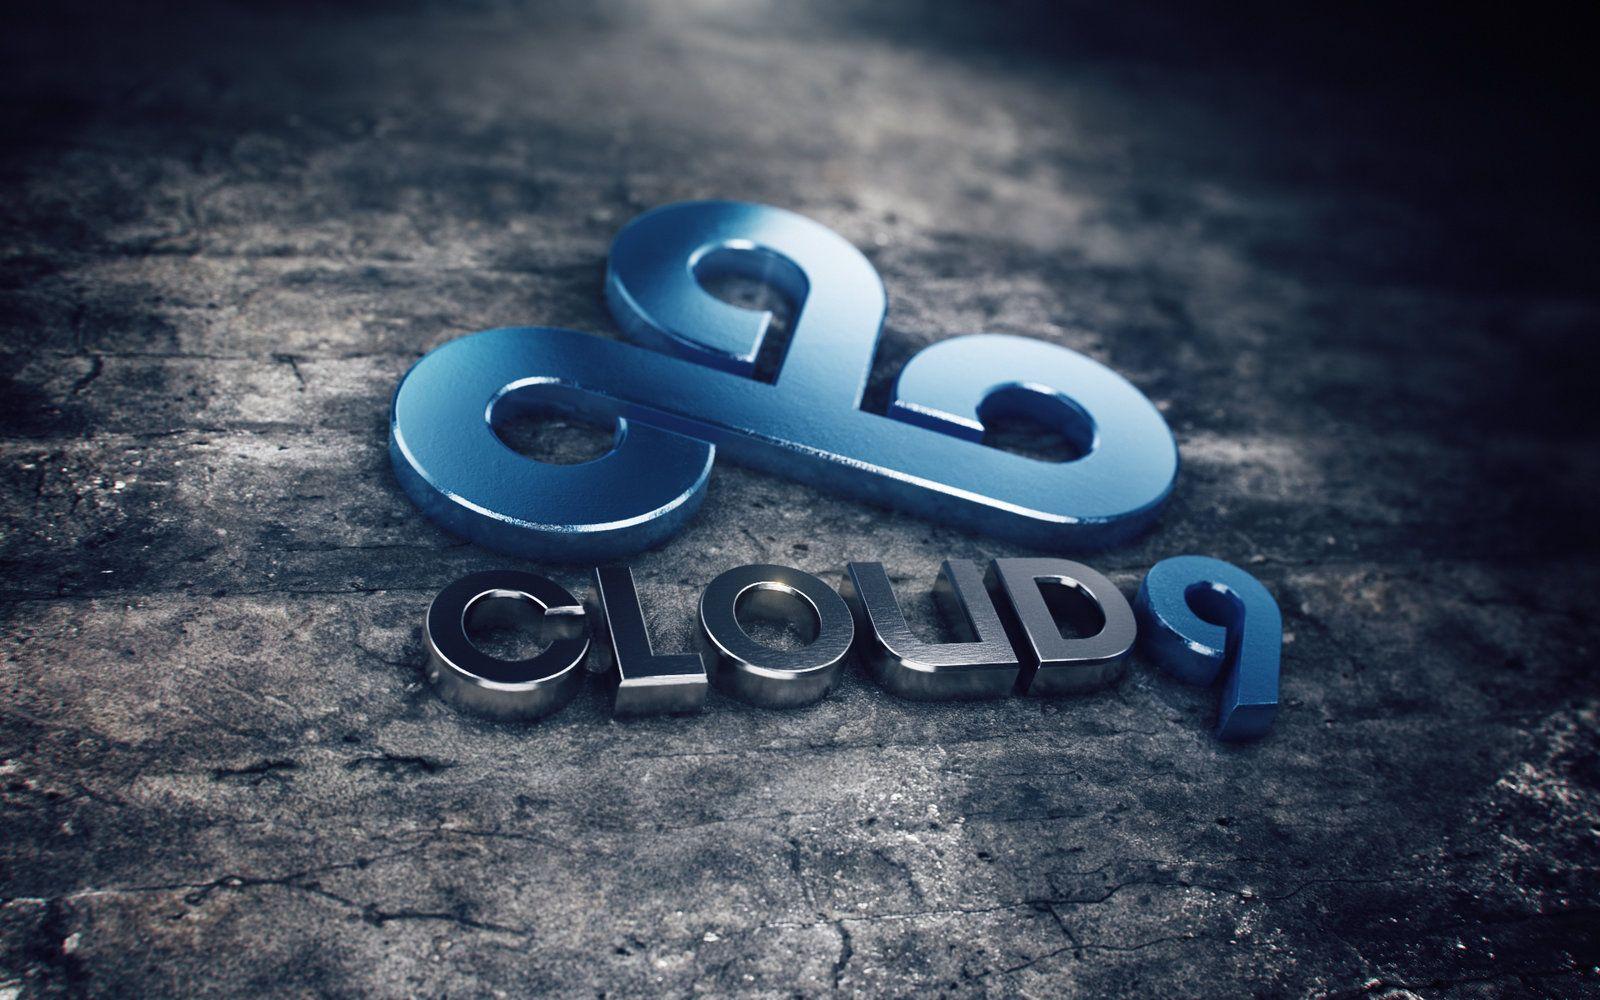 cloud 9 logo